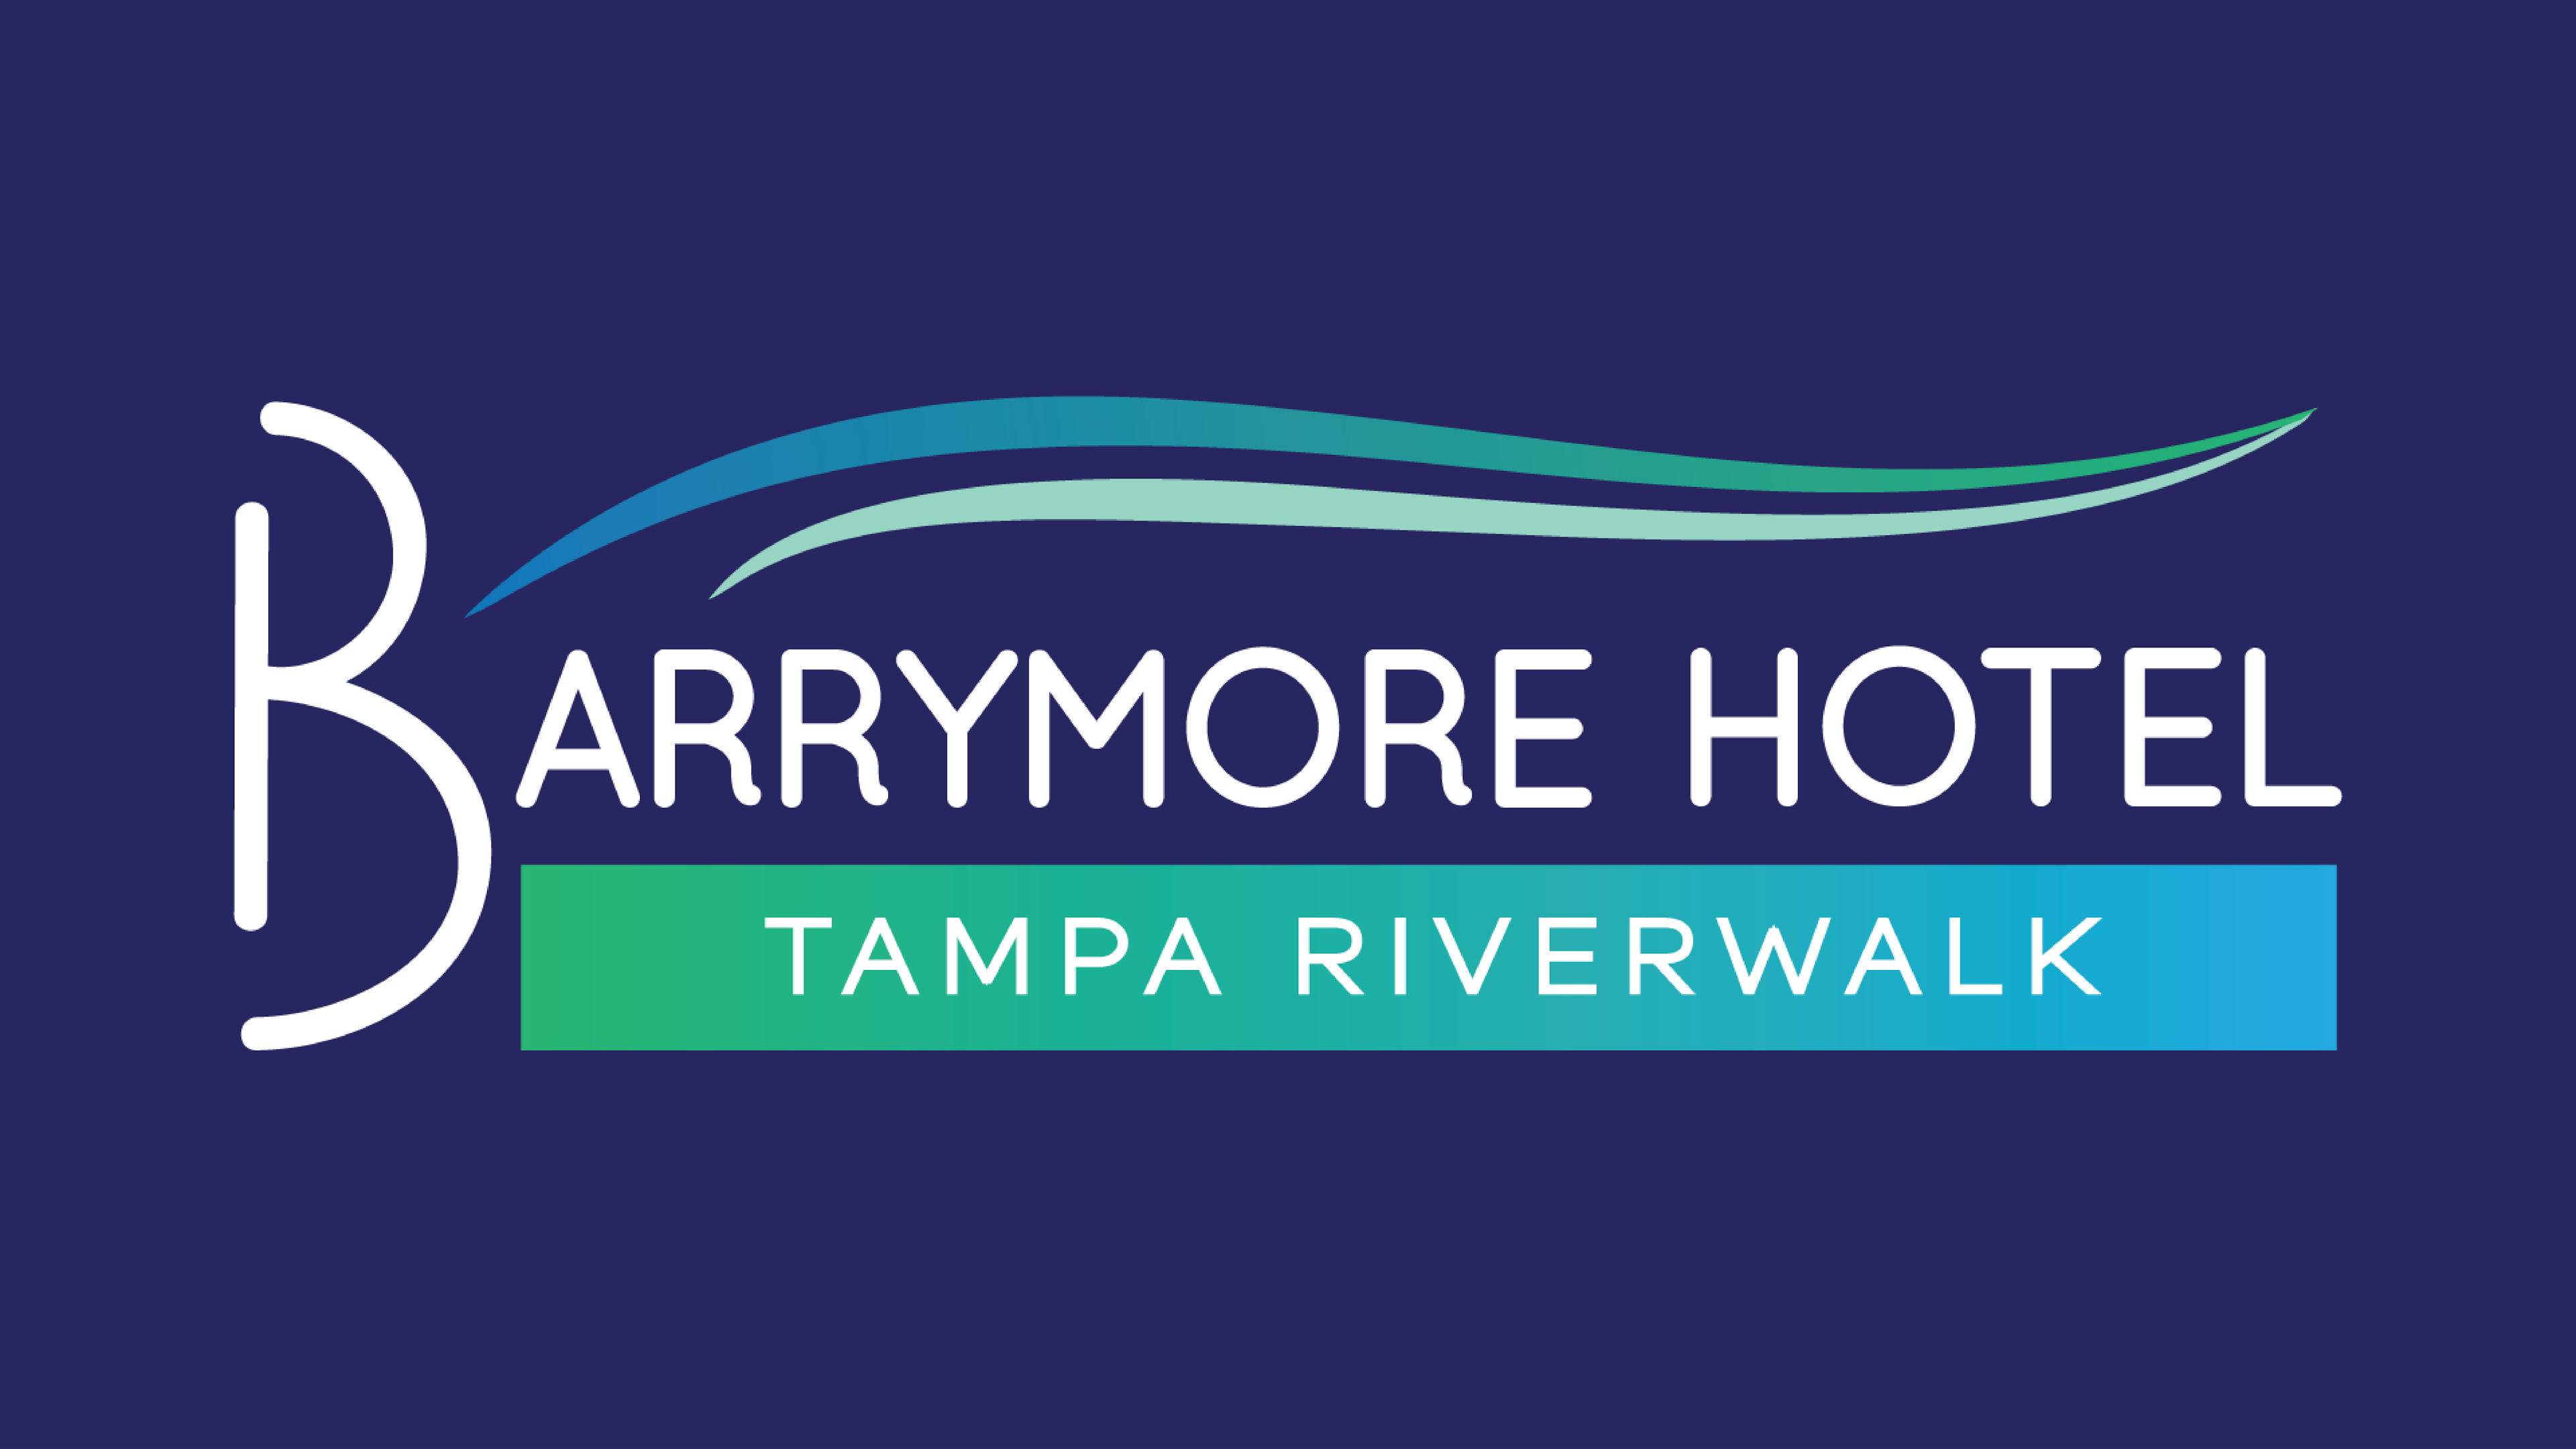 Barrymore Hotel